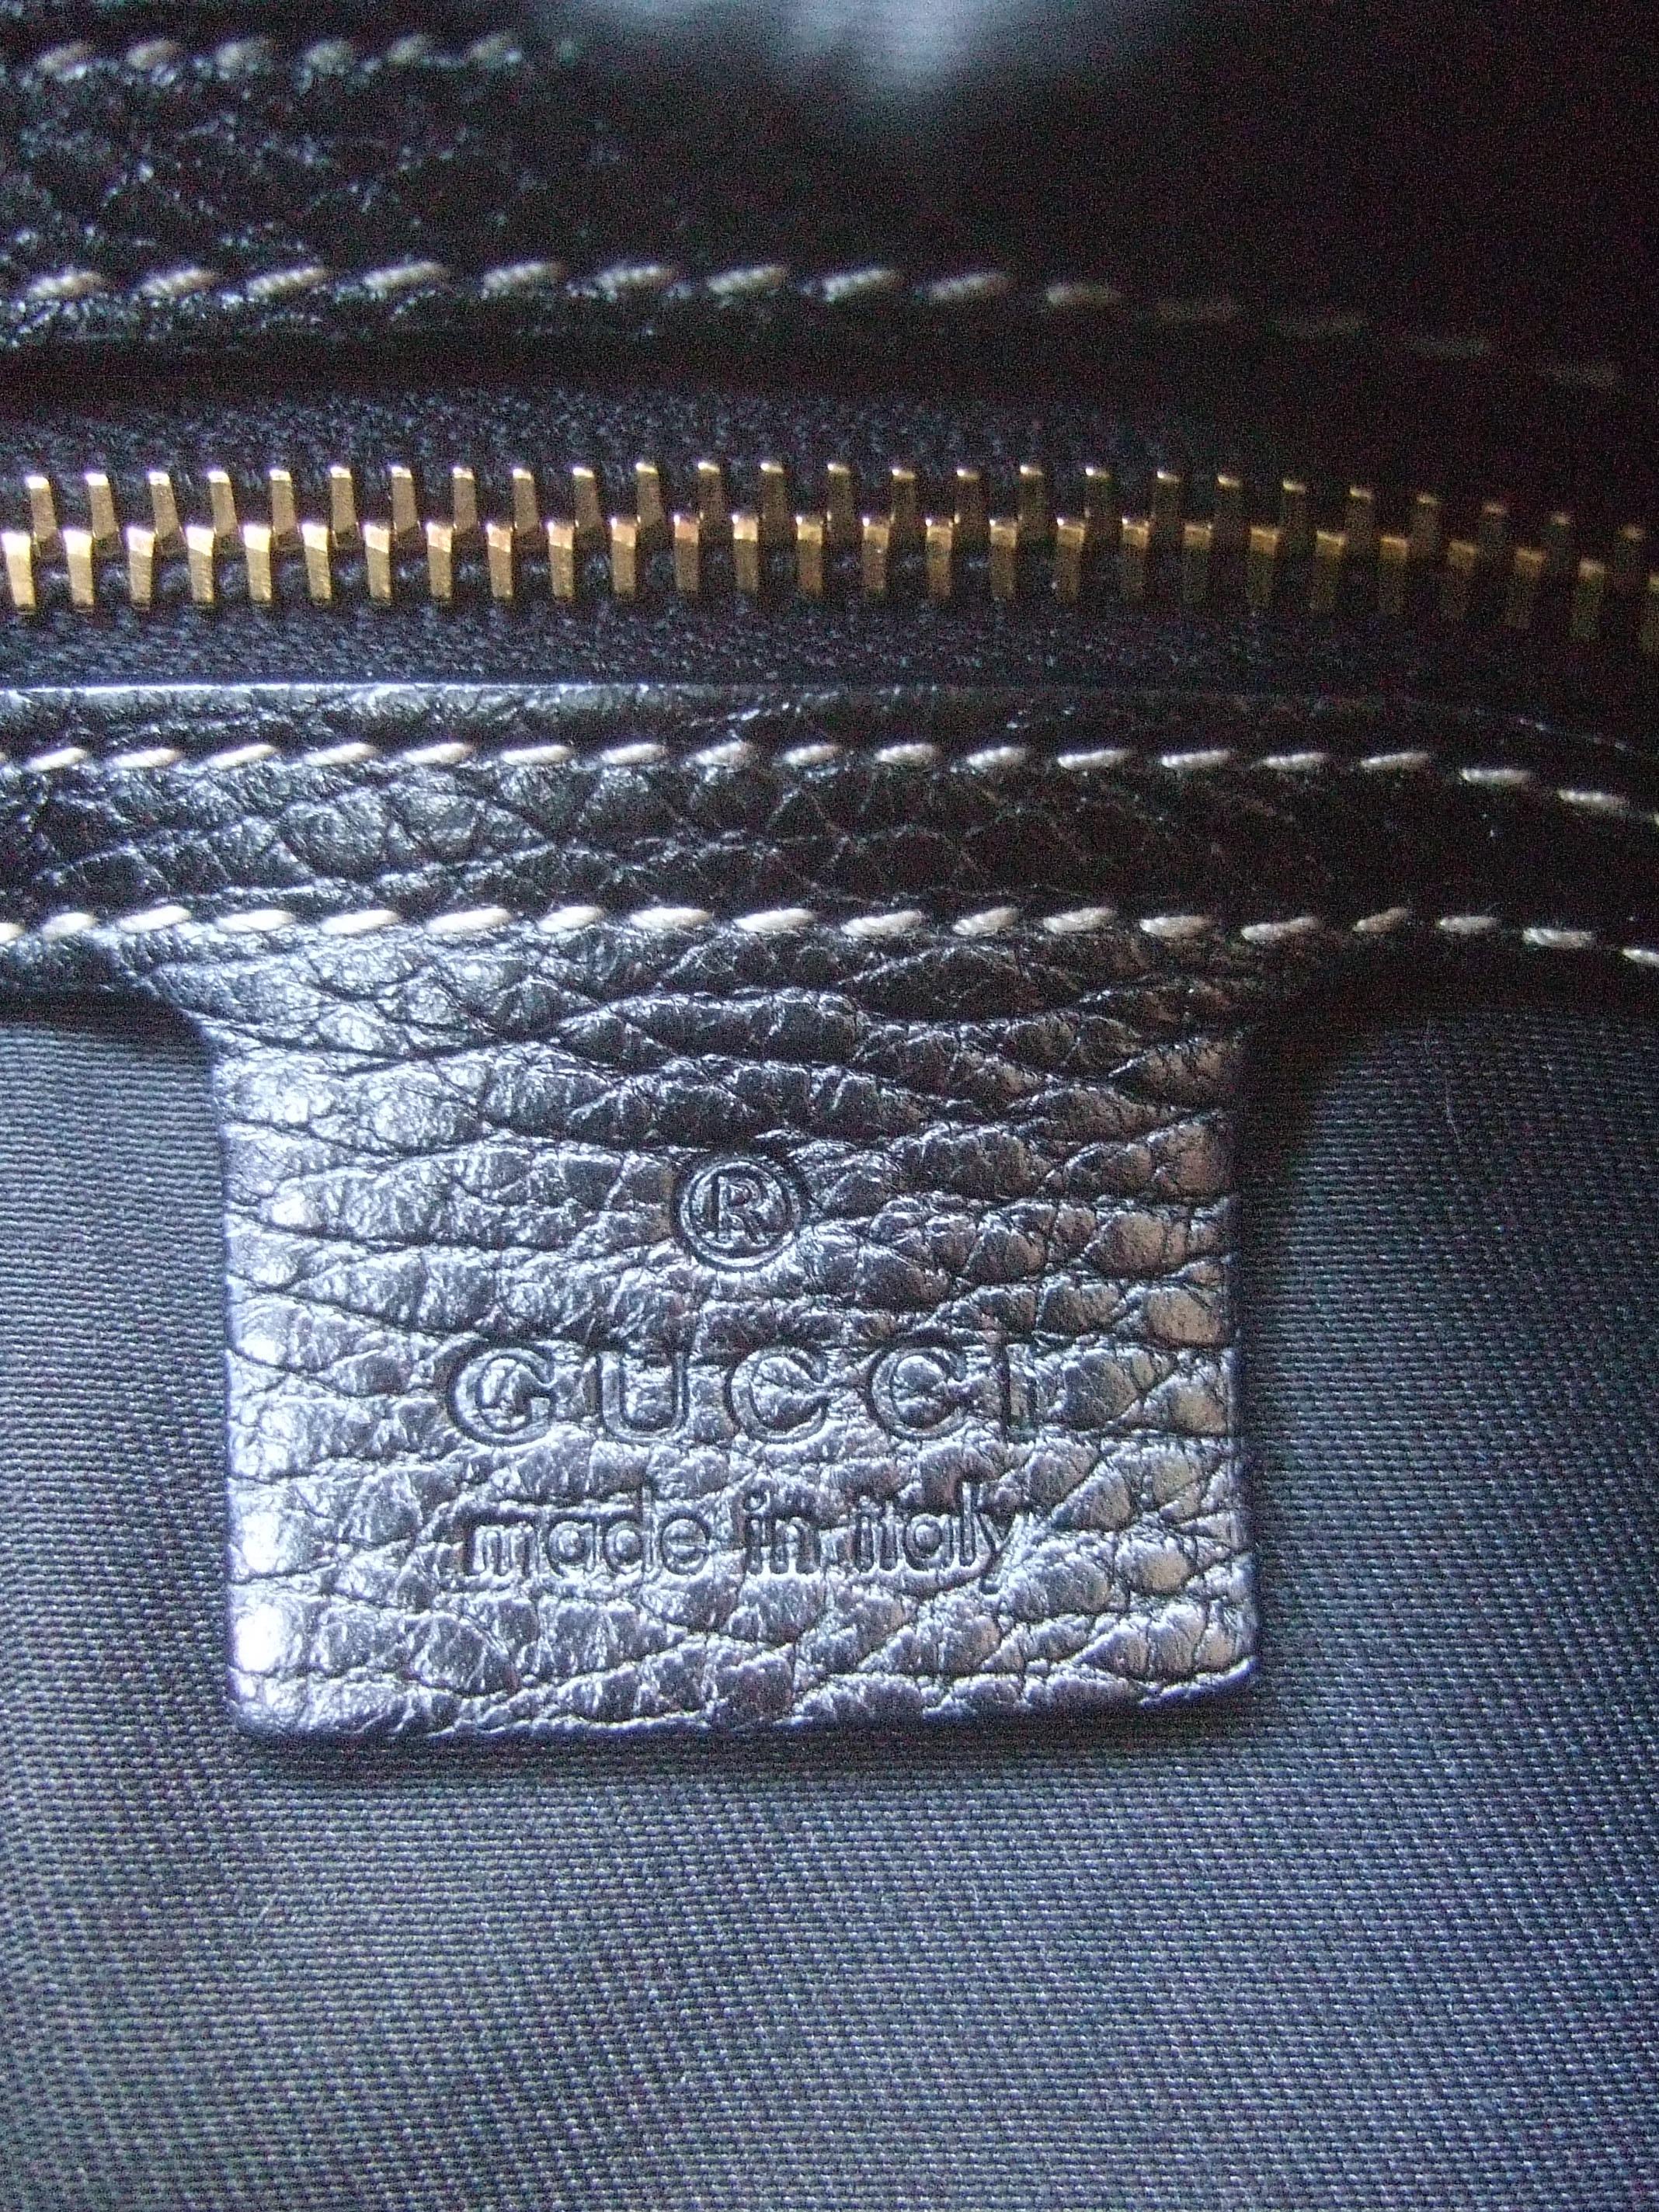 Gucci Italy Rare Embroidered Black Wool Large Handbag - Shoulder Bag c 1990s 15